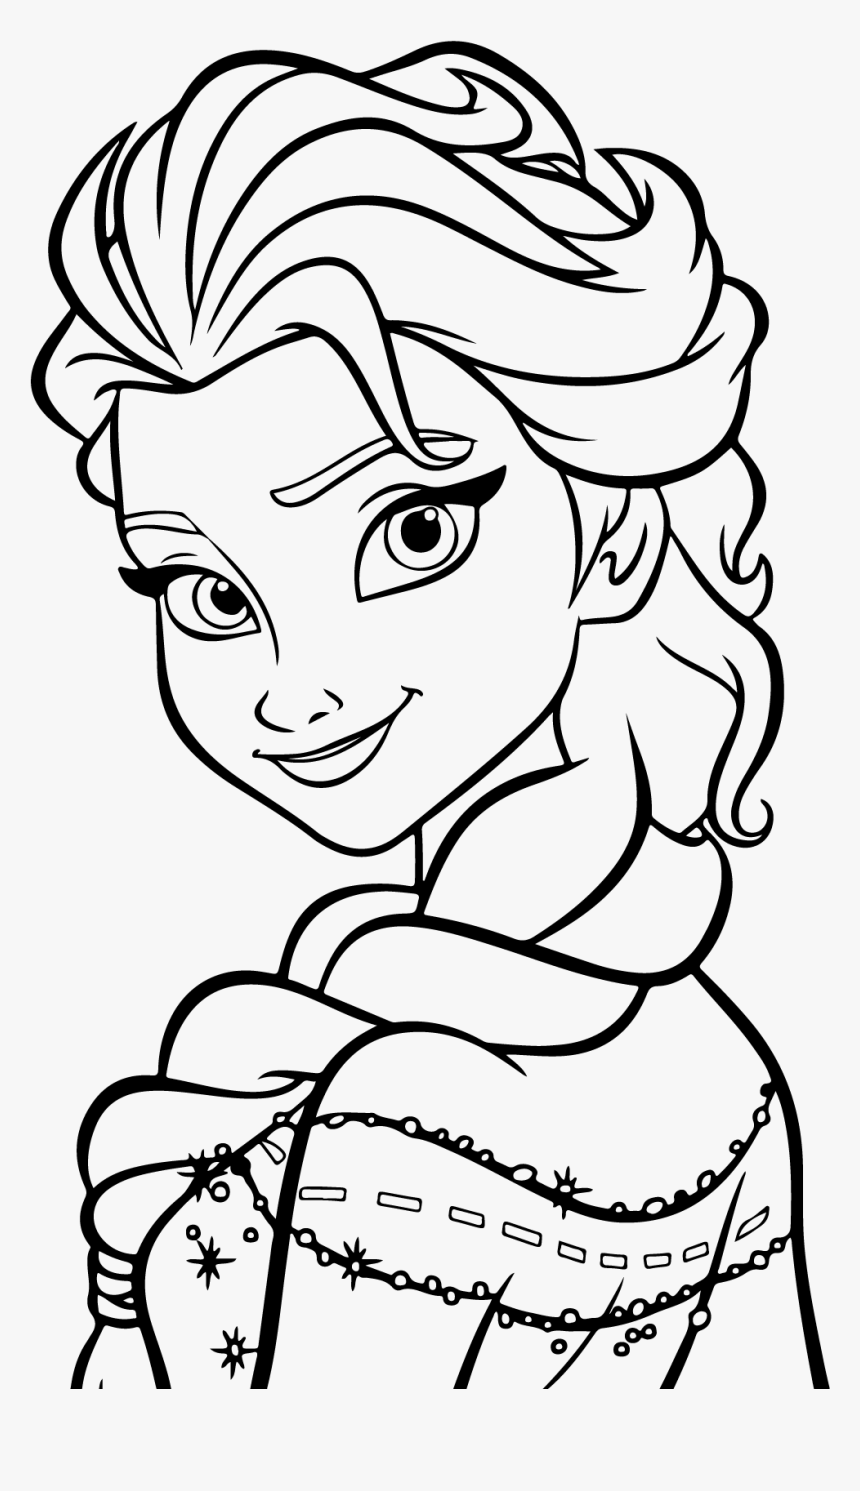 Disney Princess Frozen Elsa Coloring Page Printable   Coloring ...